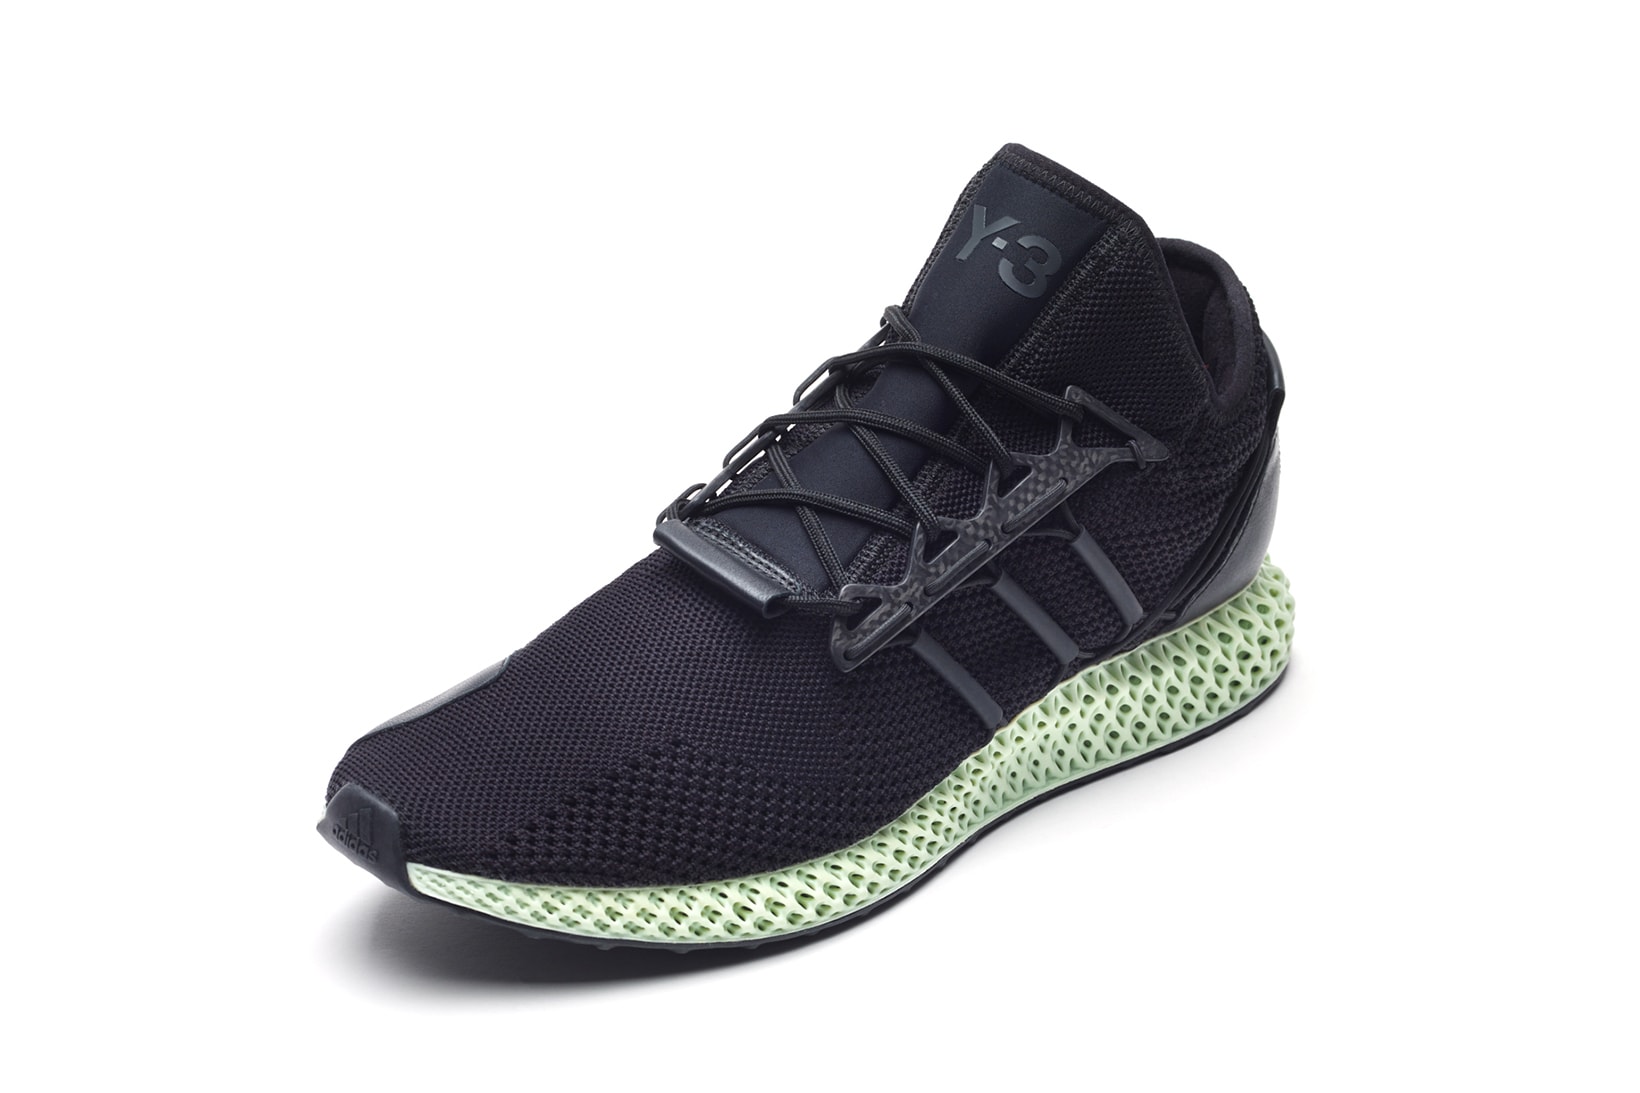 Y-3 RUNNER 4D adidas Futurecraft Yohji Yamamoto Sneaker Footwear Release Information Trainer Design Collaboration Black Green